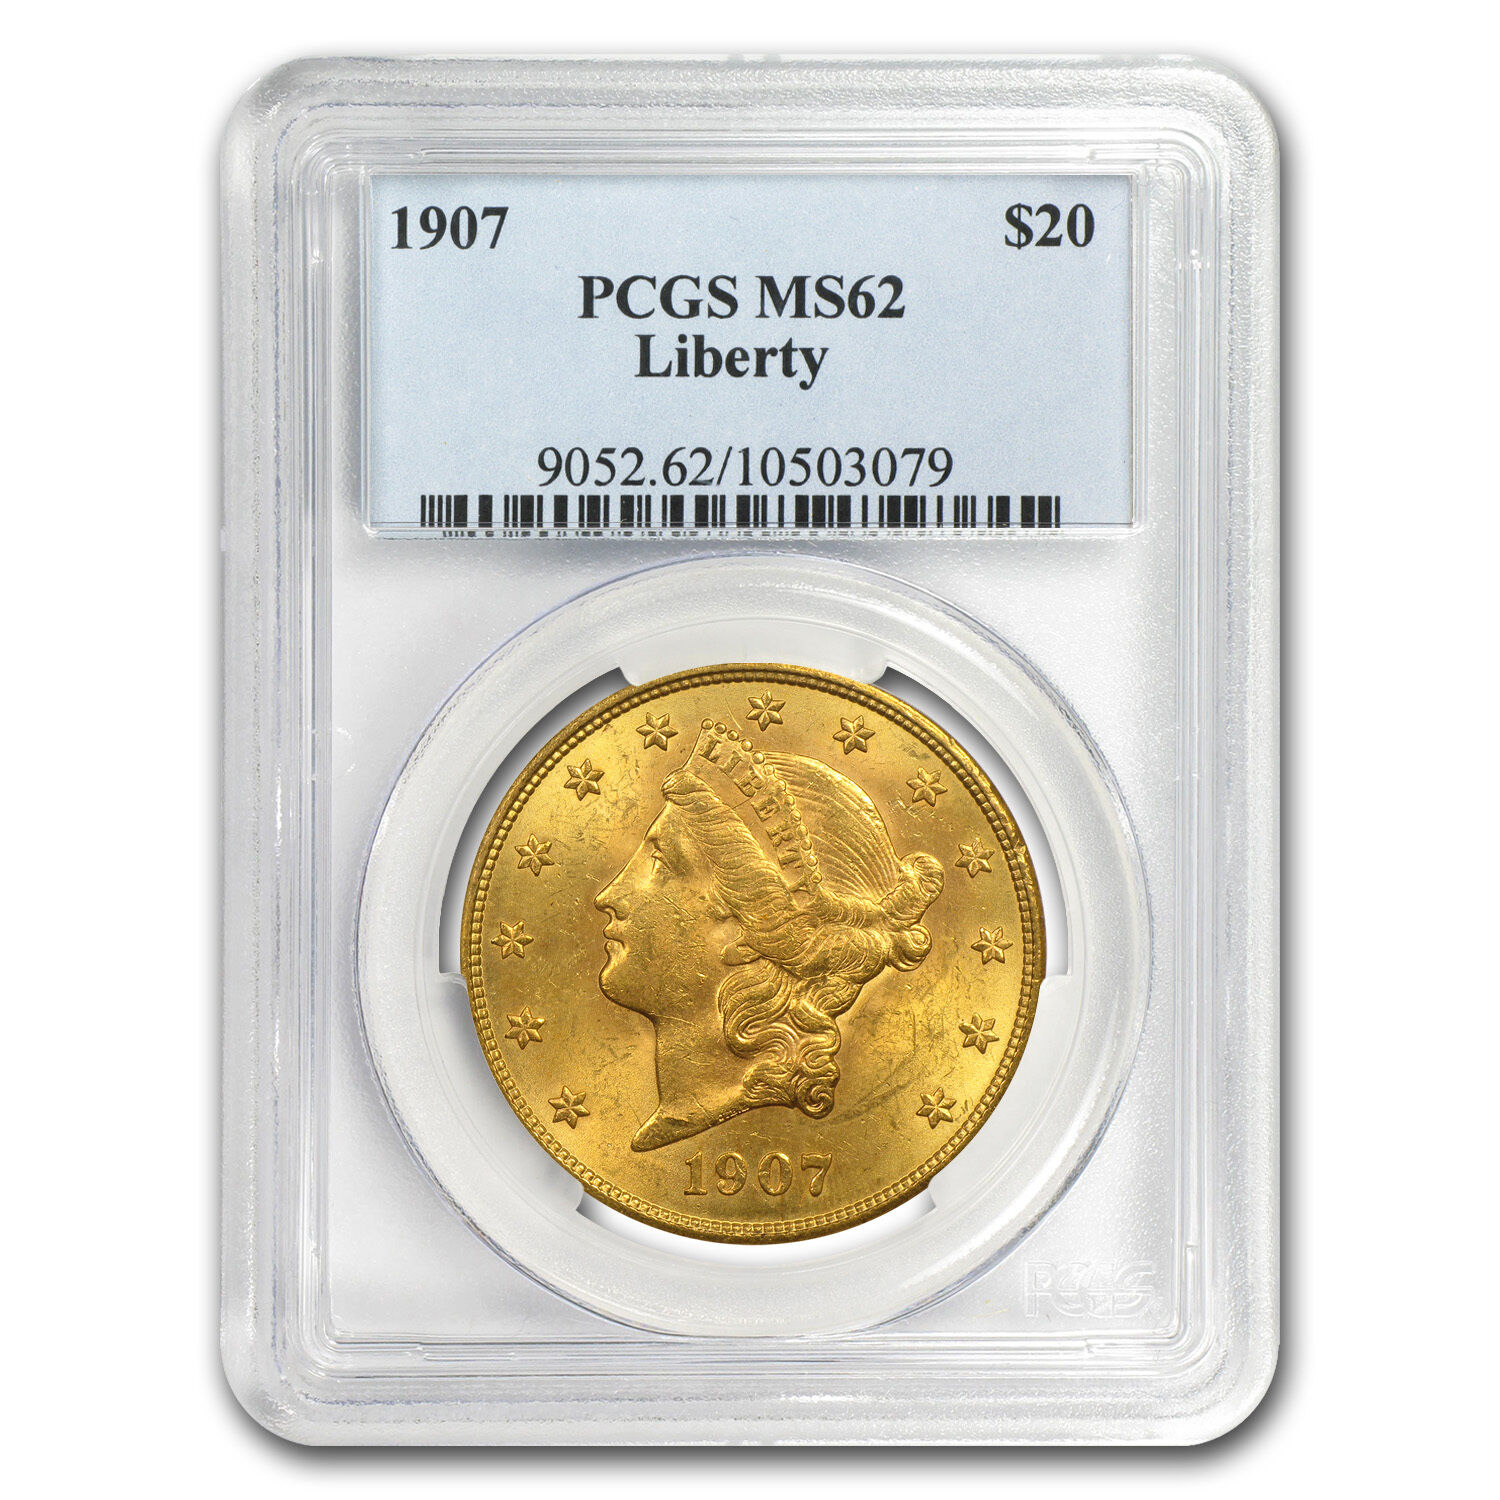 $20 Gold Liberty Double Eagle Coin - Random Year - MS-62 PCGS - SKU #7226